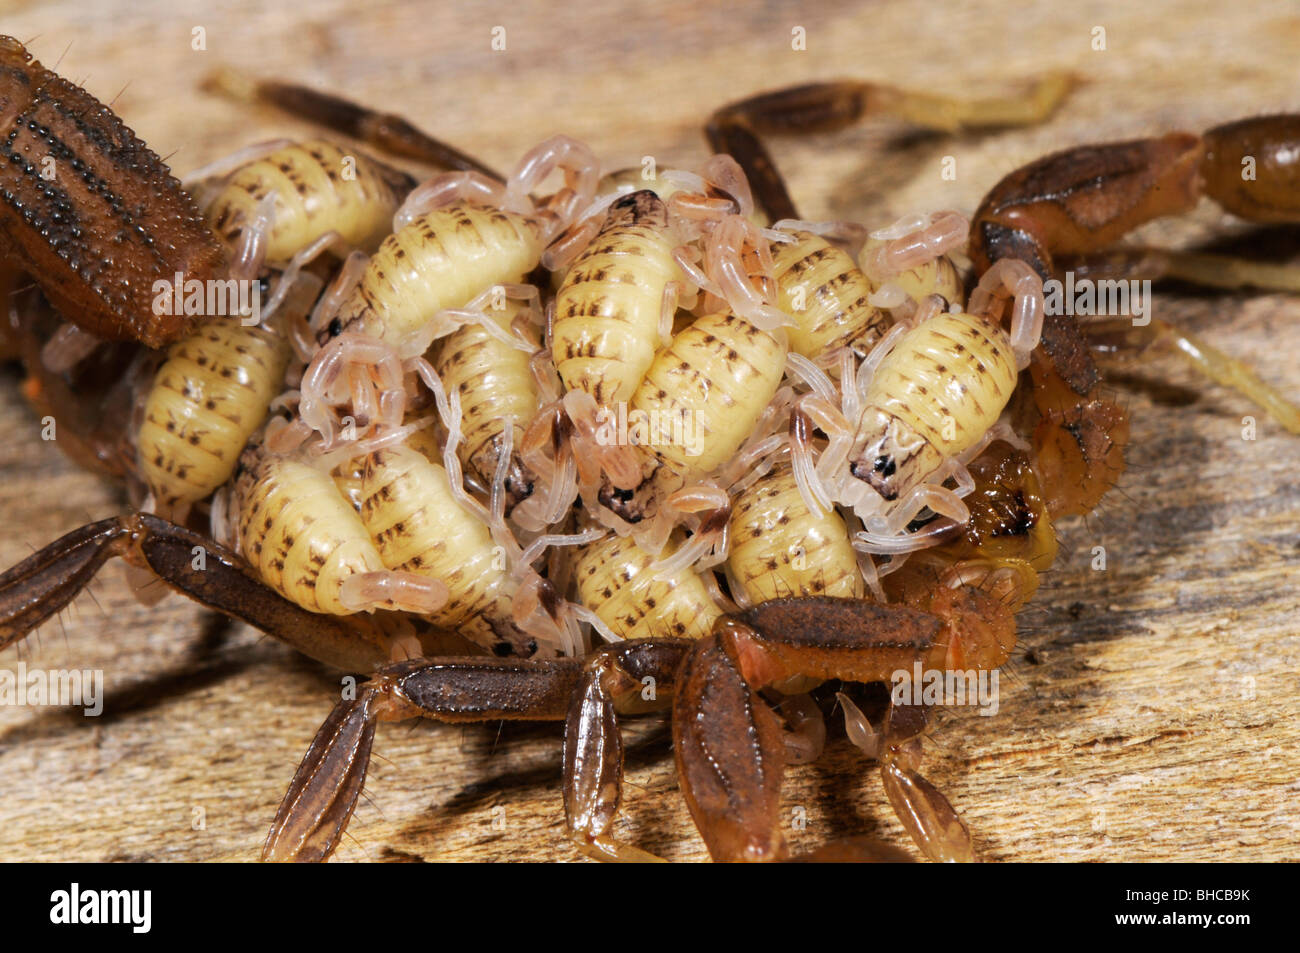 Hottentota Skorpion, trägt seine jungen fotografiert in Tansania, Afrika Stockfoto